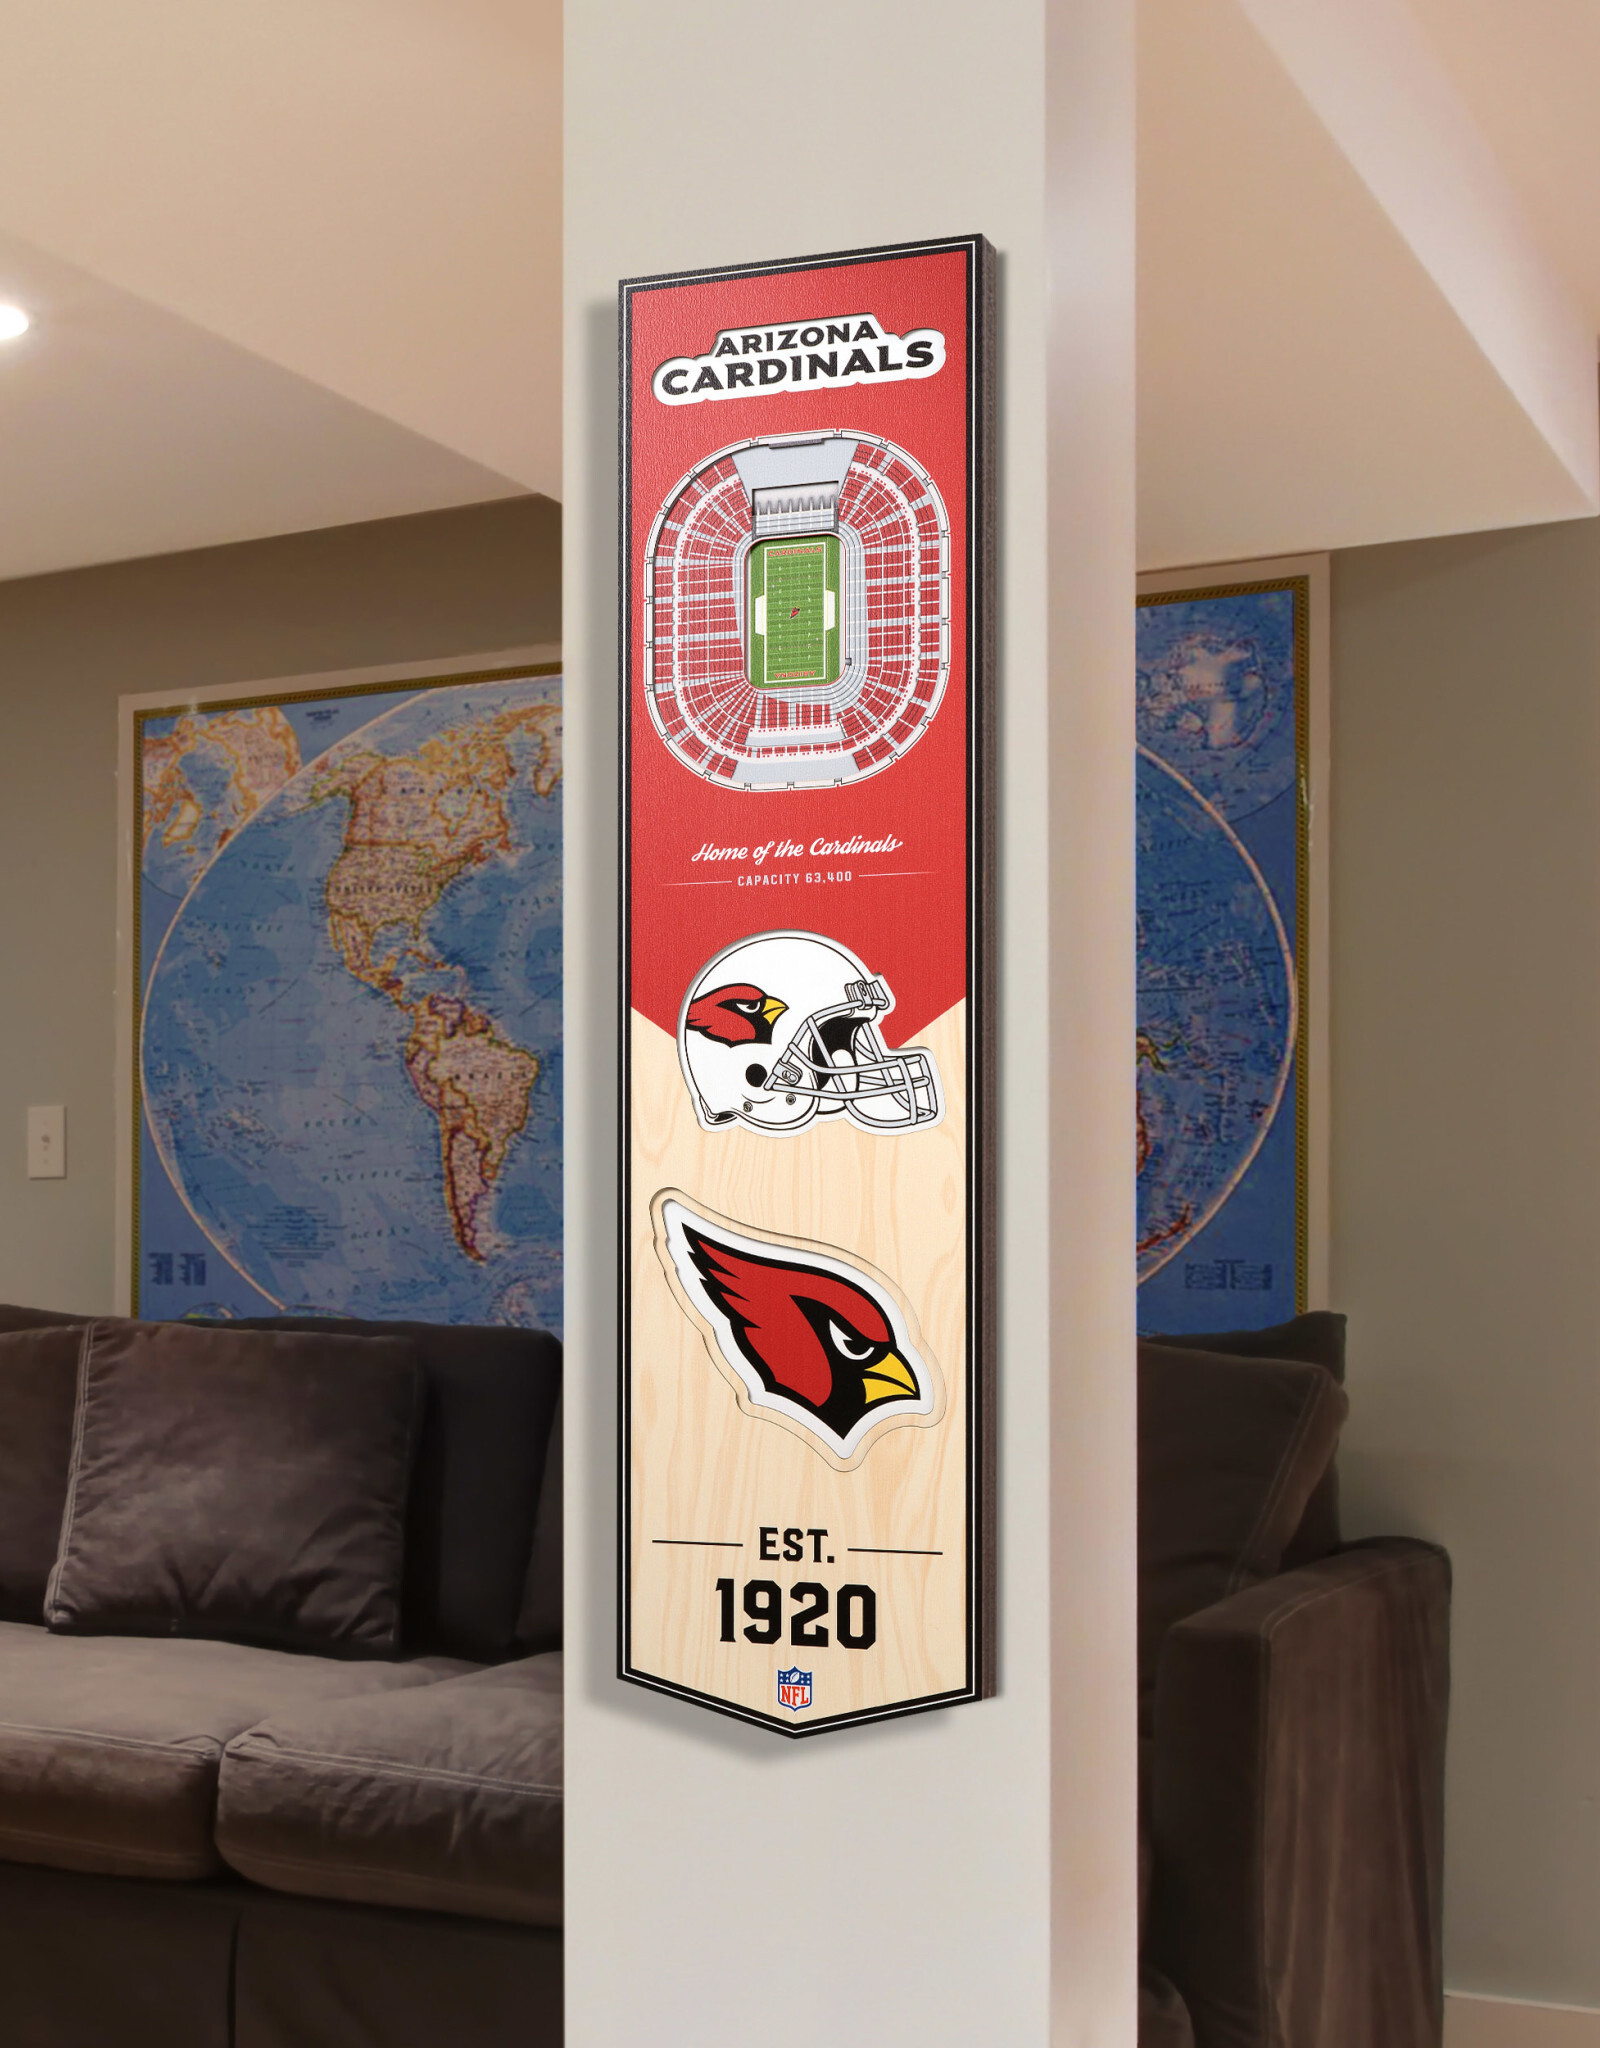 YOU THE FAN Arizona Cardinals 3D StadiumView 8x32 Banner